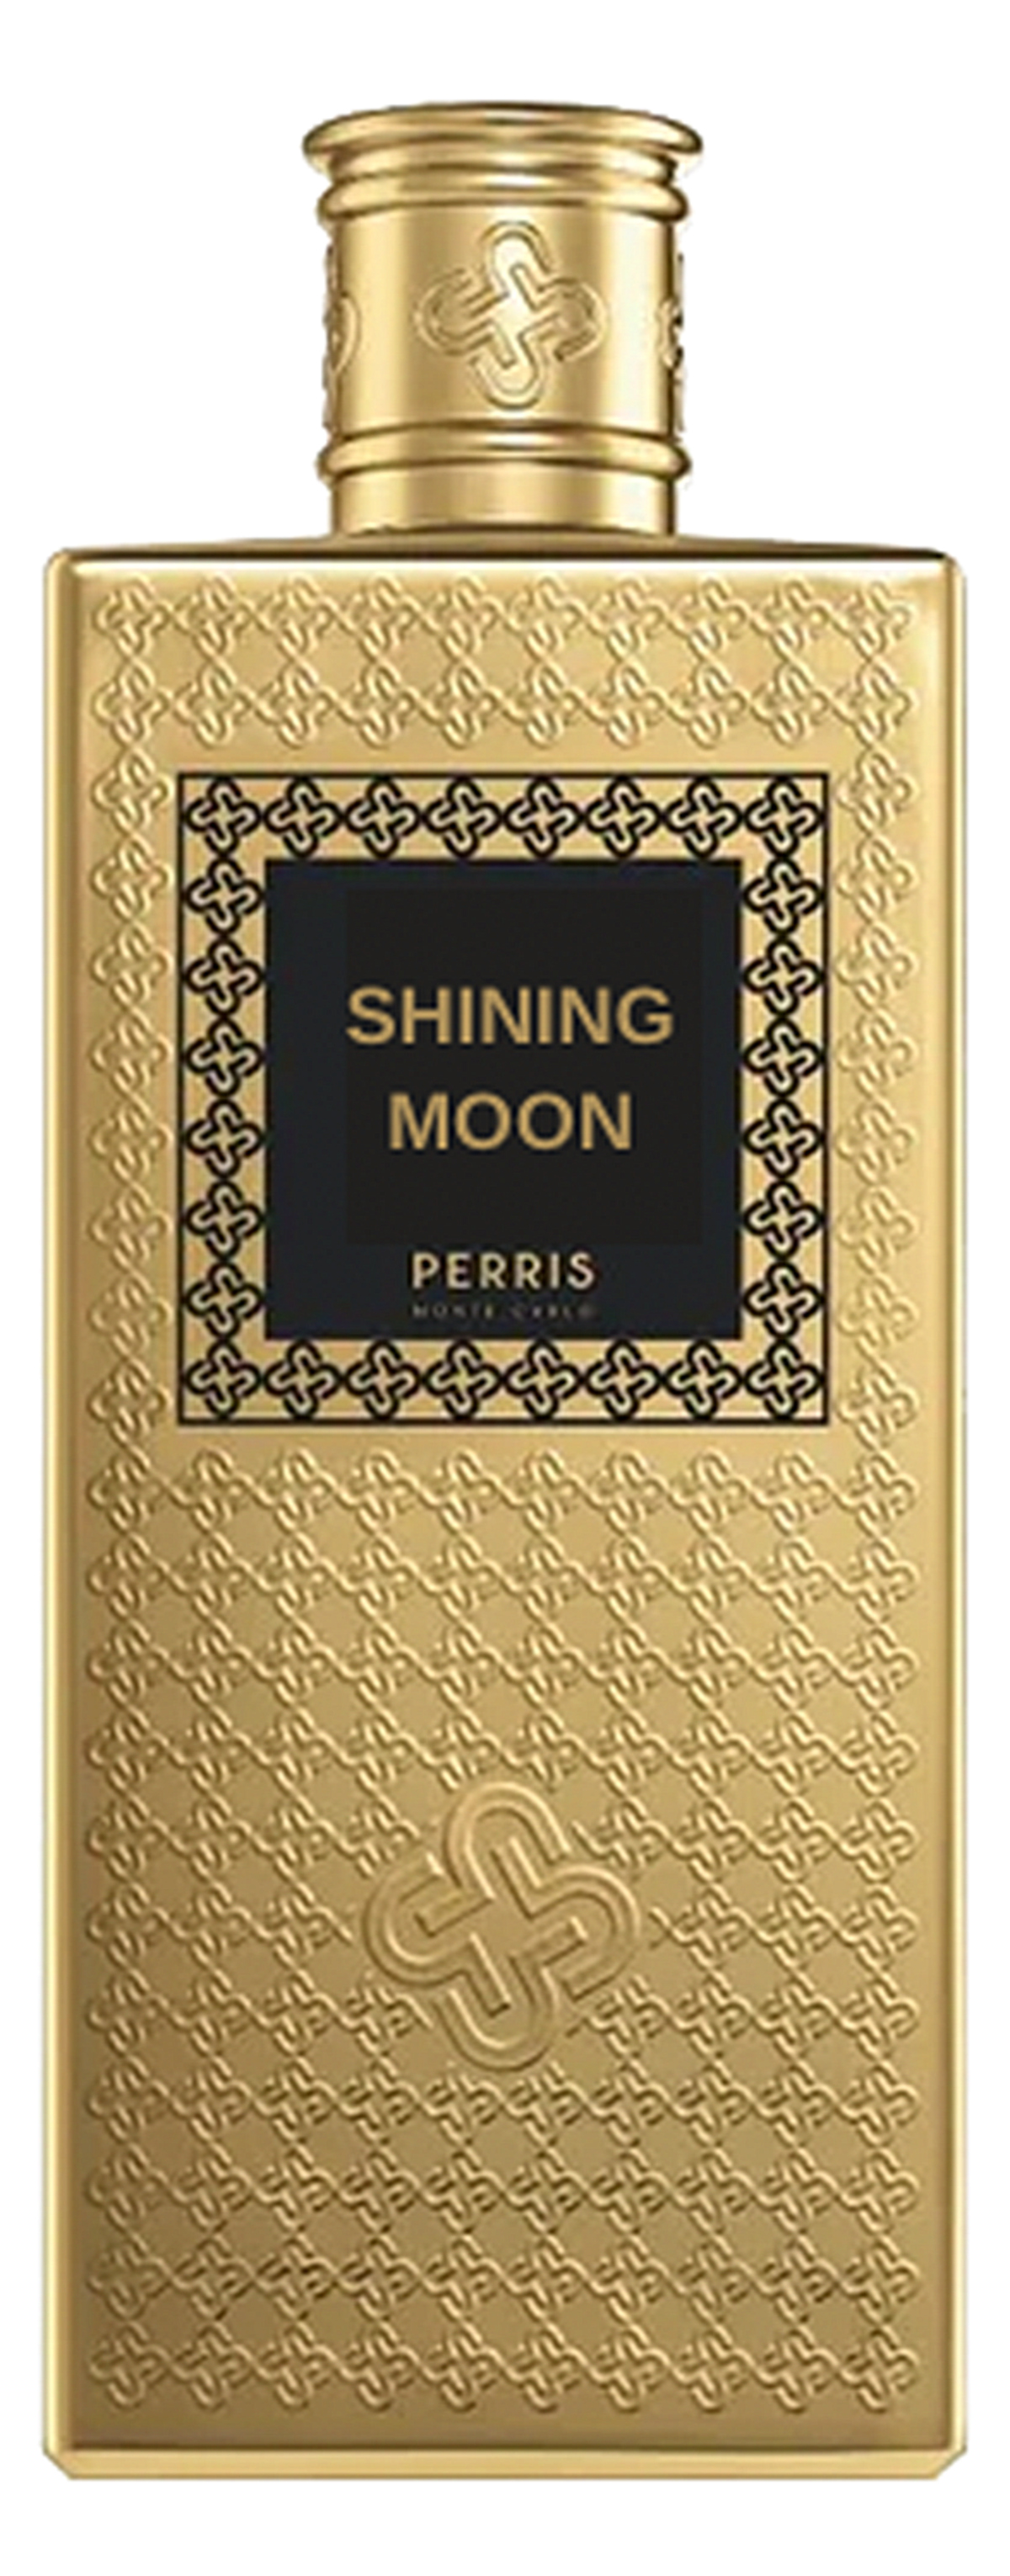 Shining Moon - Perris Monte Carlo